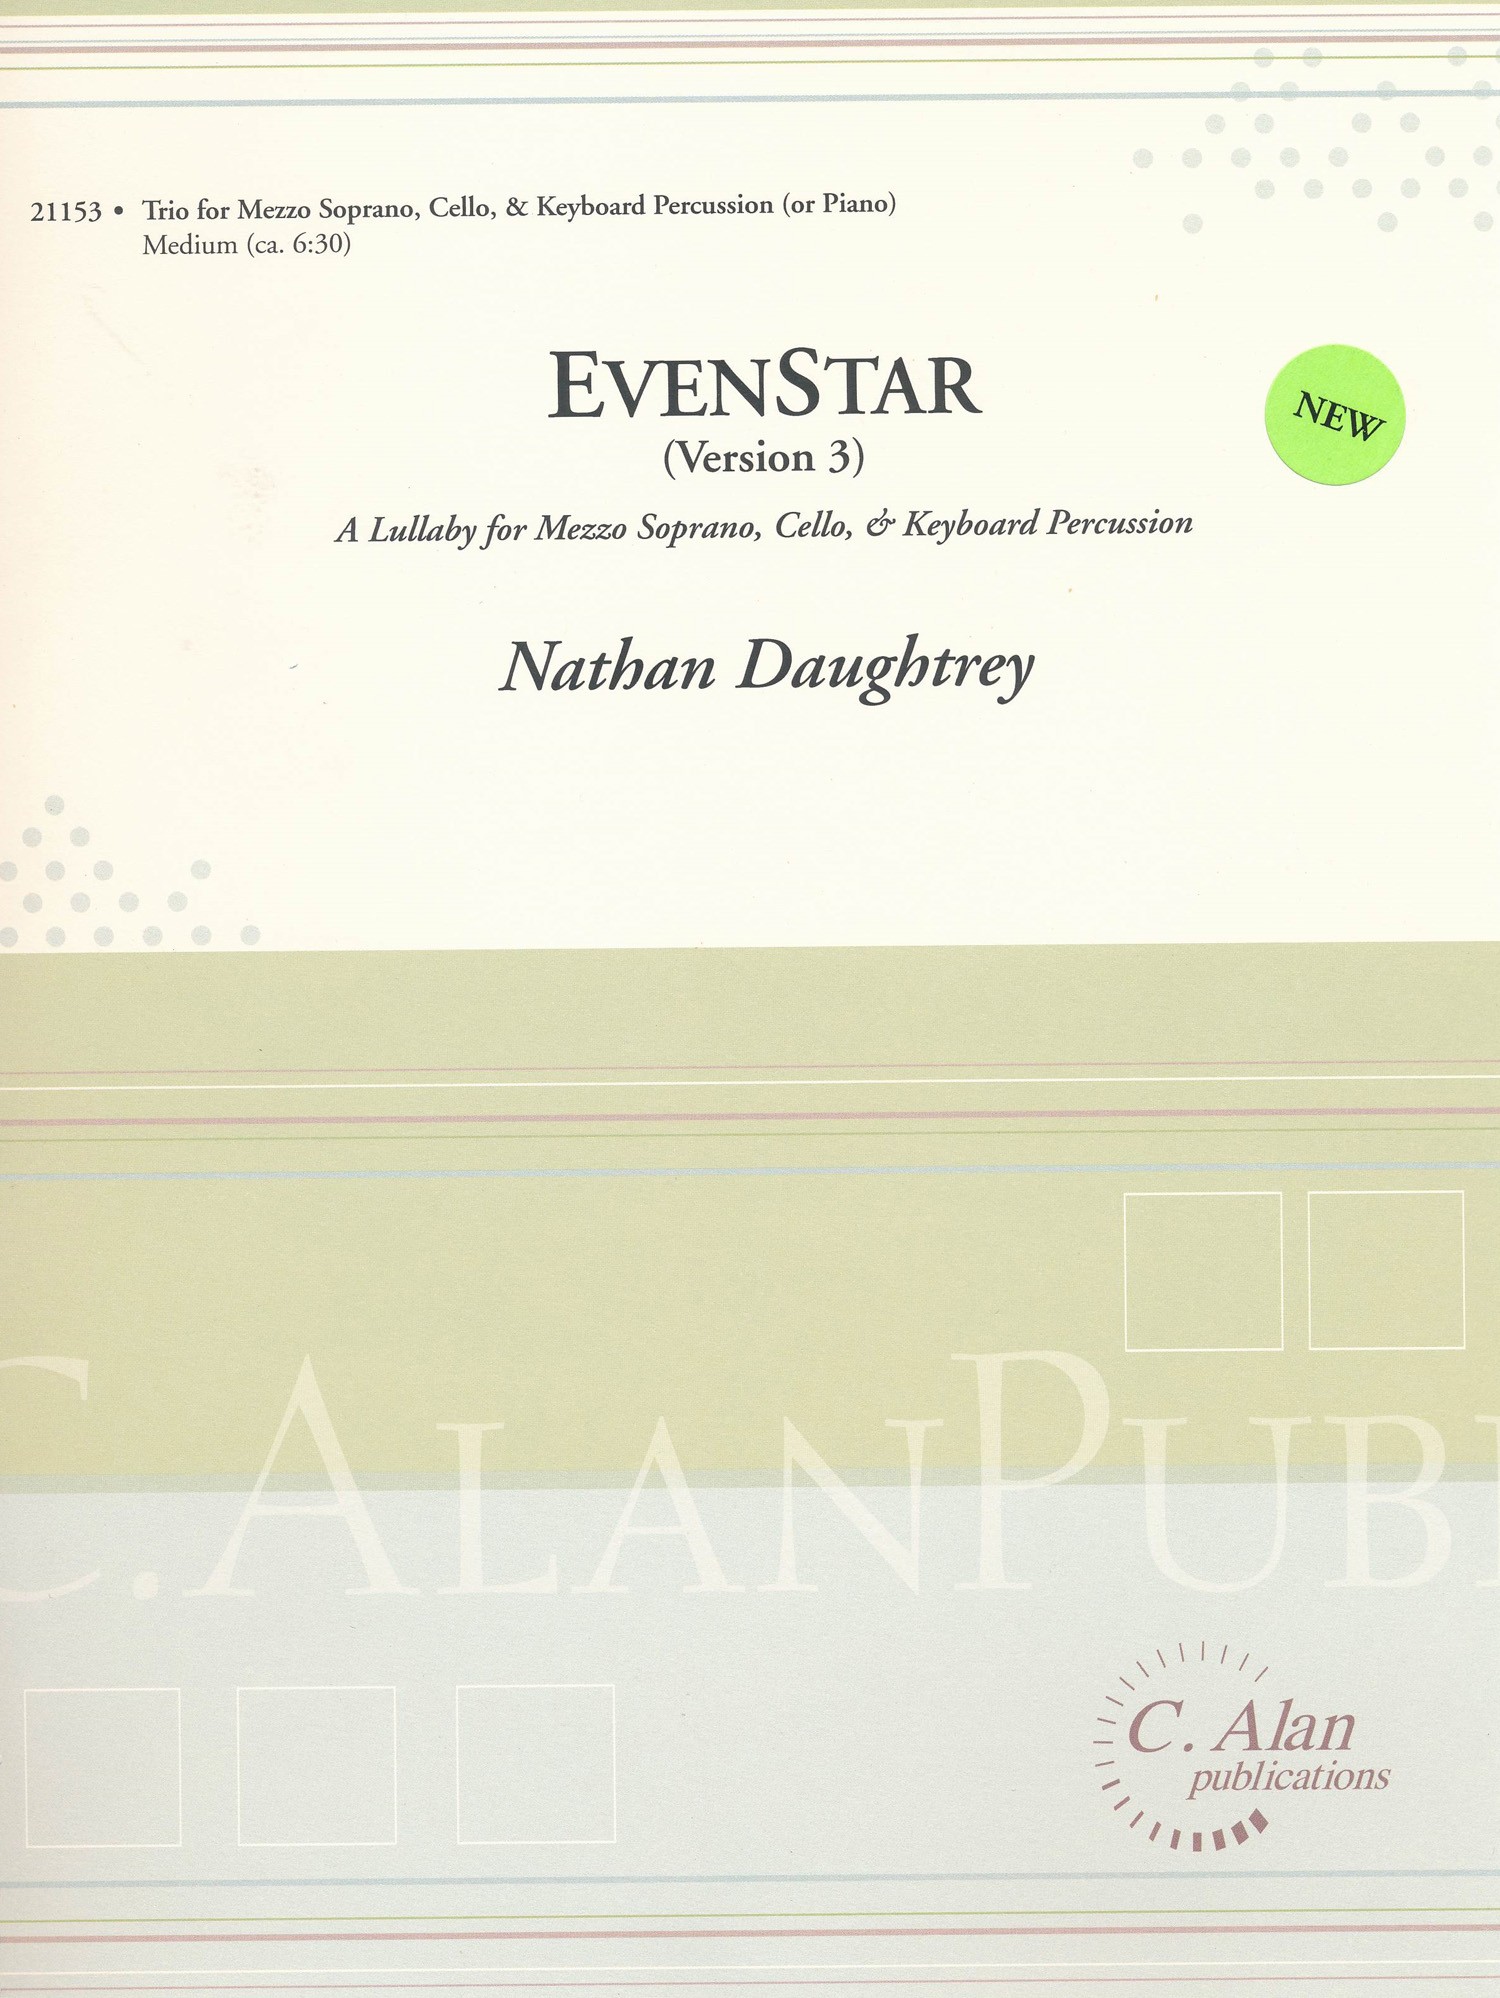 EvenStar (Version 3) by Nathan Daughtrey